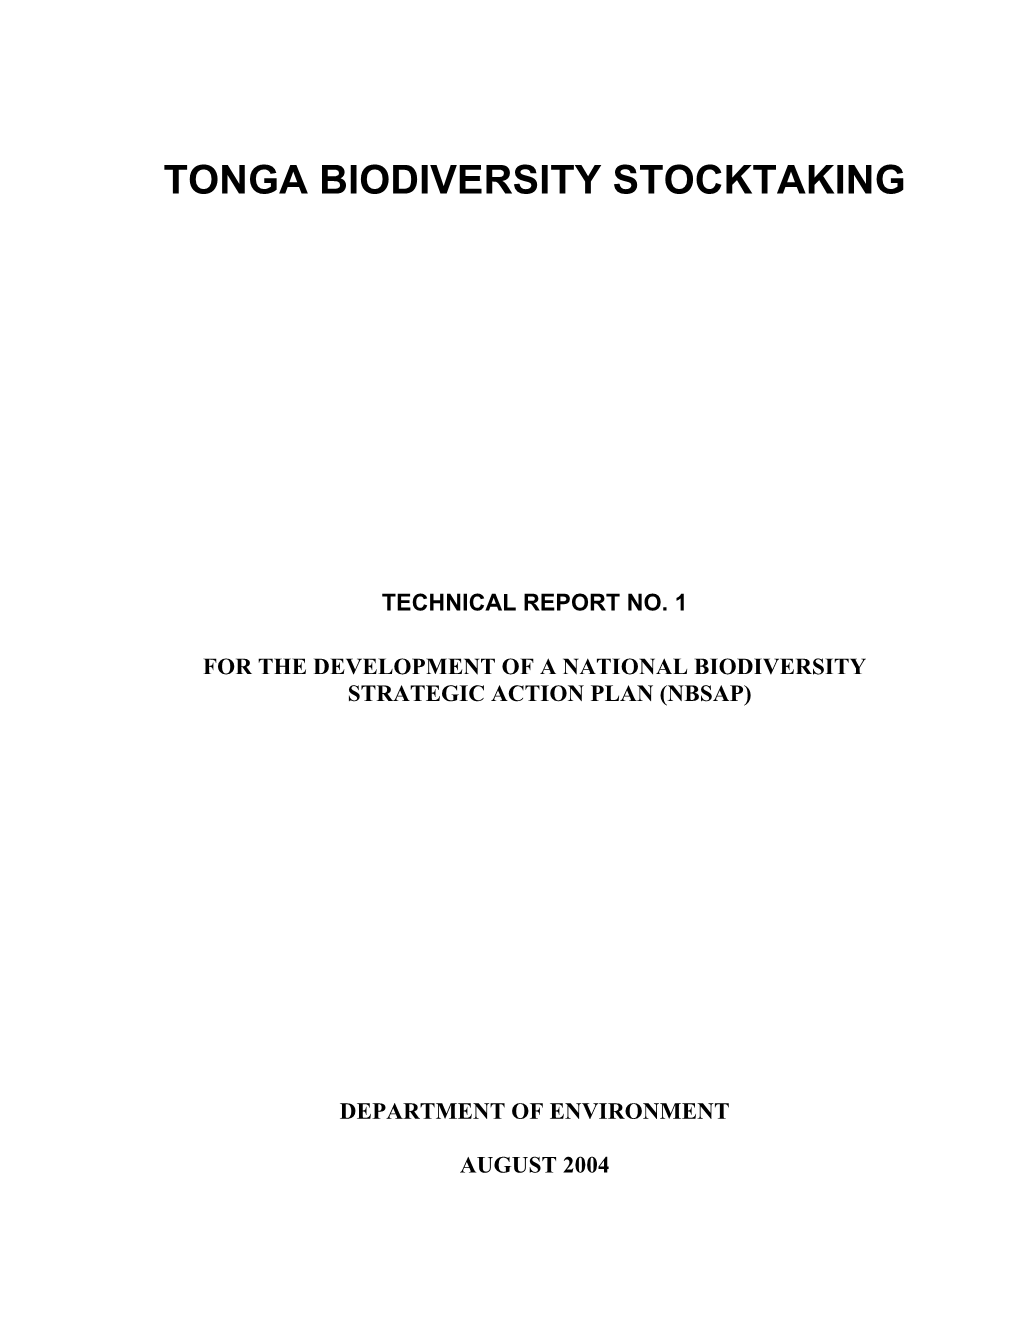 Tonga Biodiversity Stocktaking